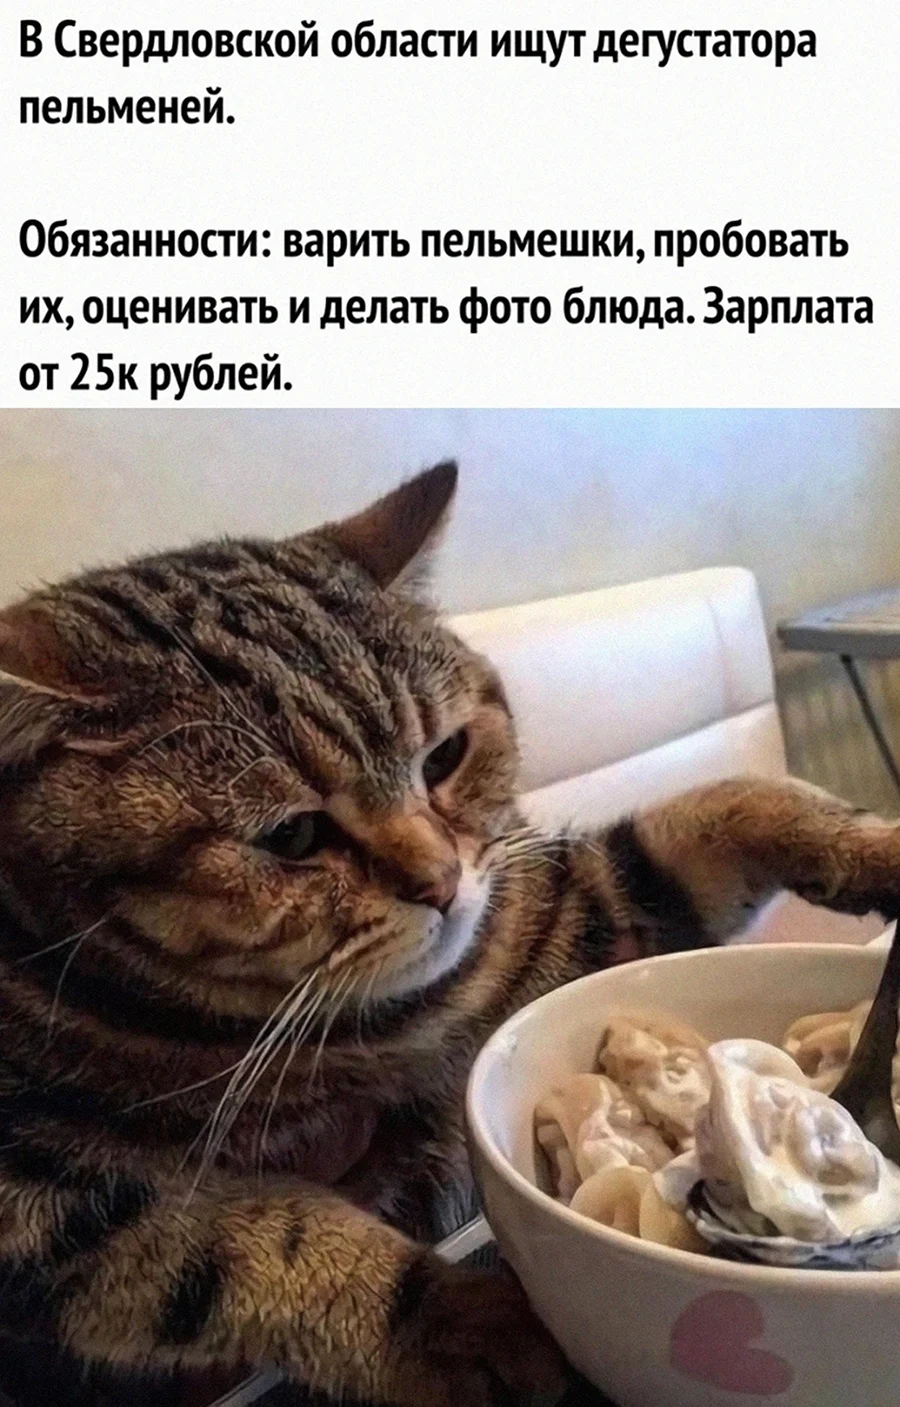 Кот ест пельмени. Картинка